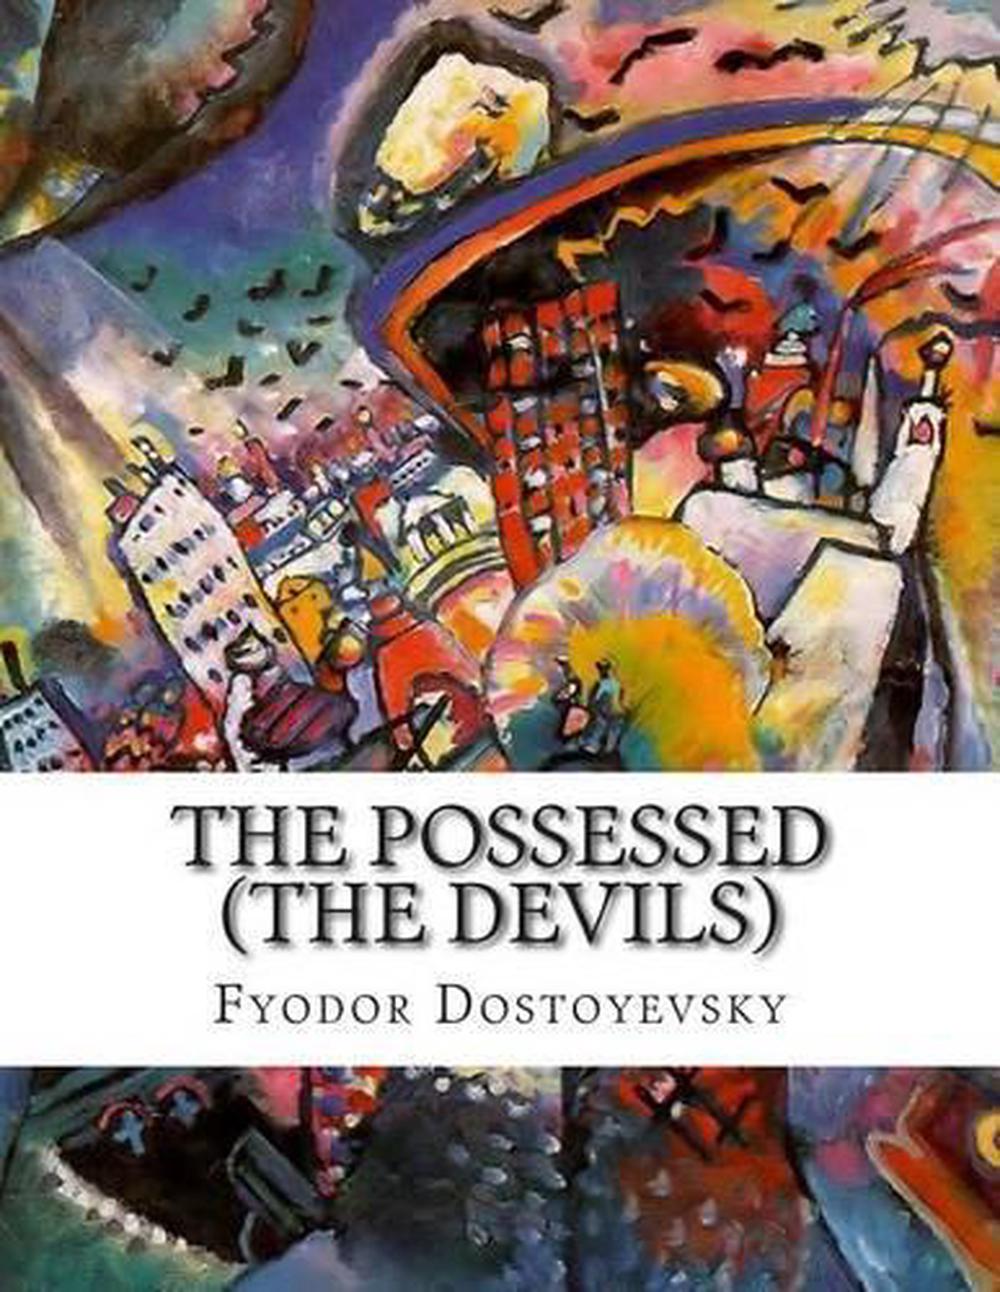 fyodor dostoevsky devils